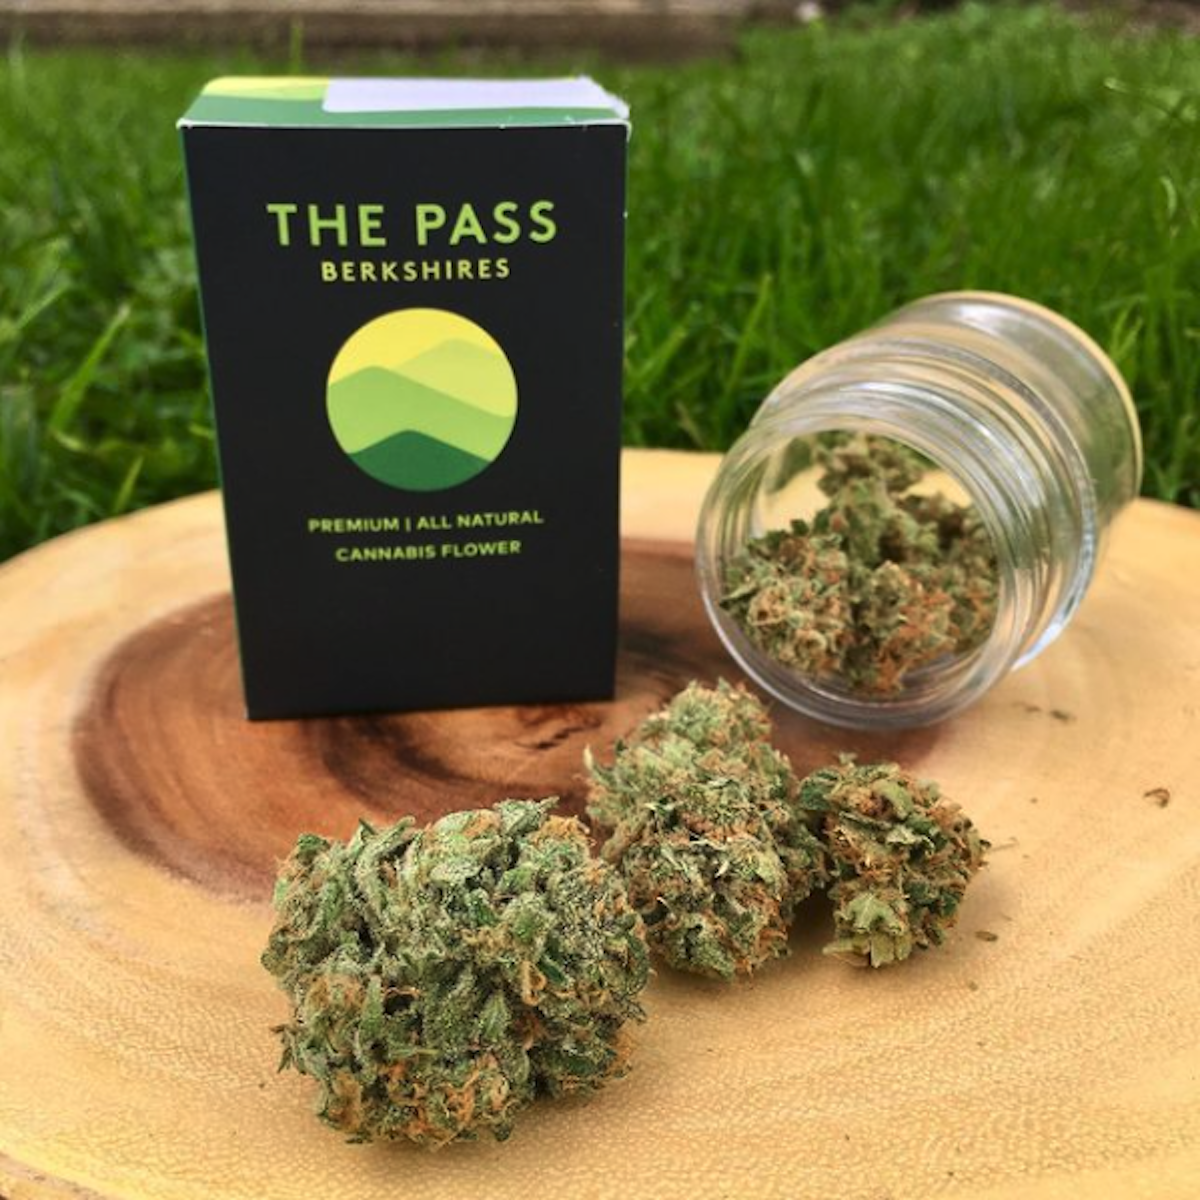 The Pass prepackaged cannabis flower